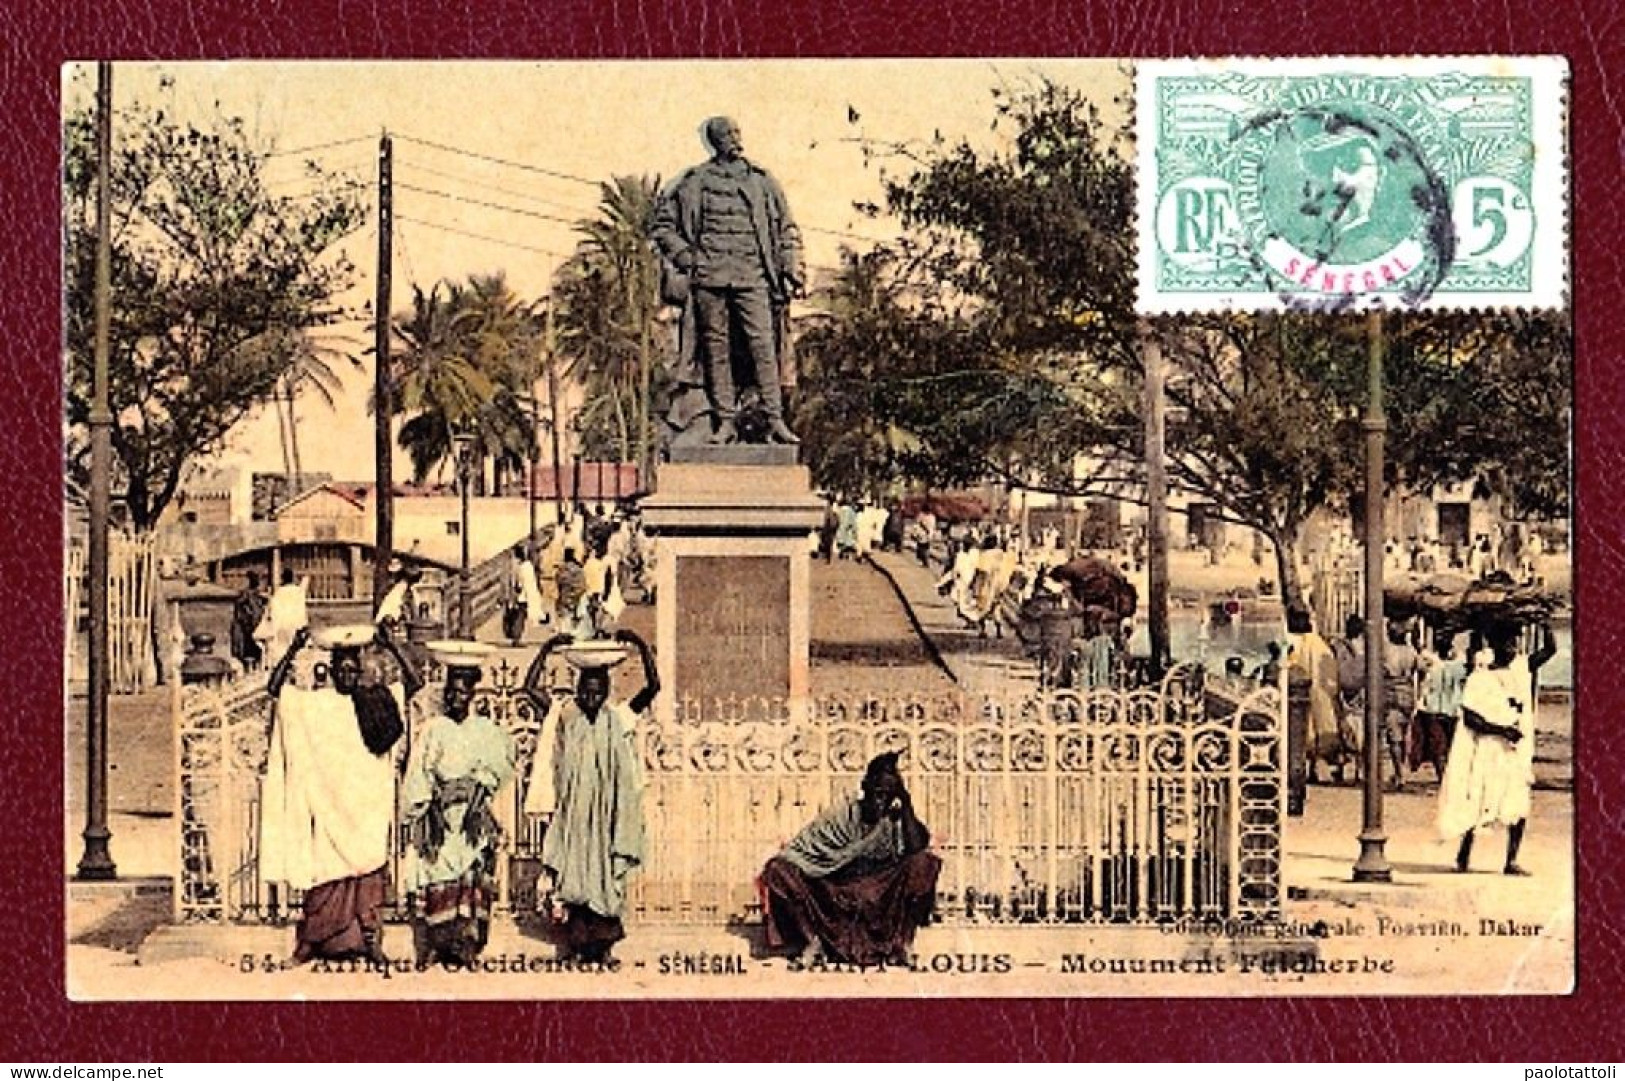 Senegal, S. Luis. Monument Feldherbe. Coll. Generale Fortier, Dakar. No. 54. - Senegal